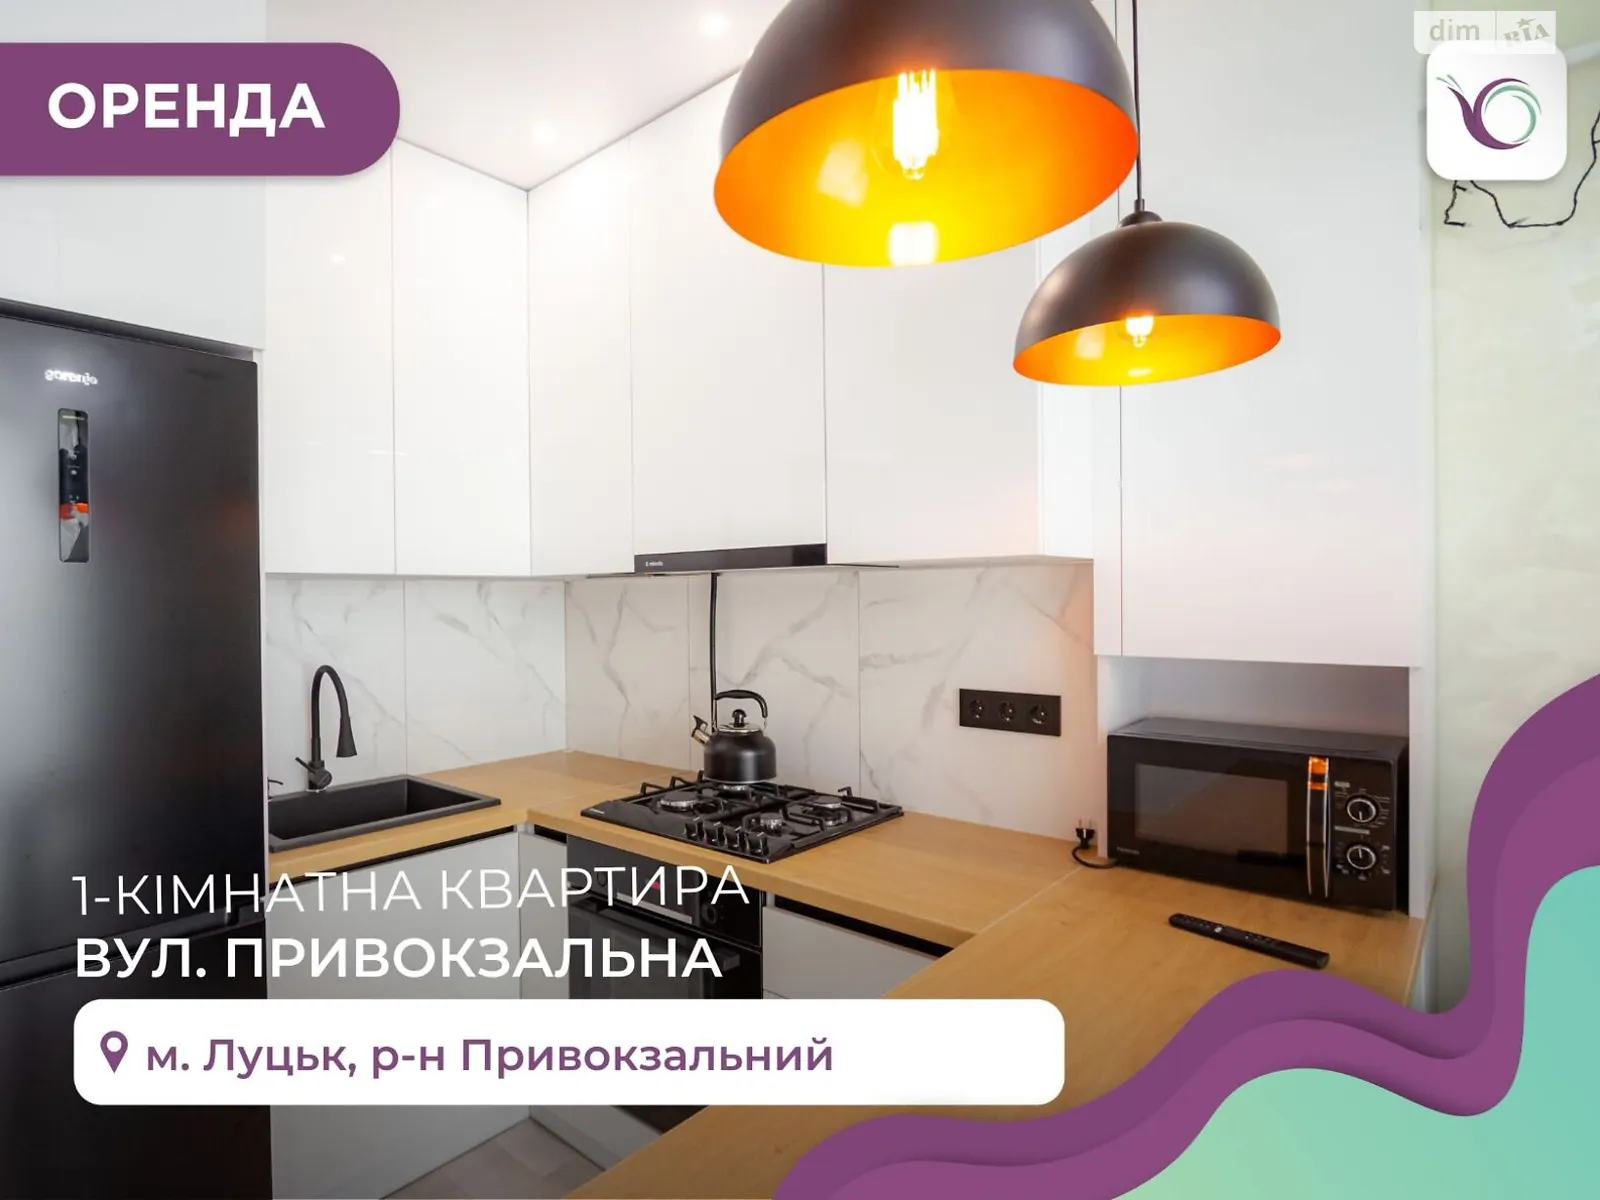 1-кімнатна квартира 47 кв. м у Луцьку, цена: 16000 грн